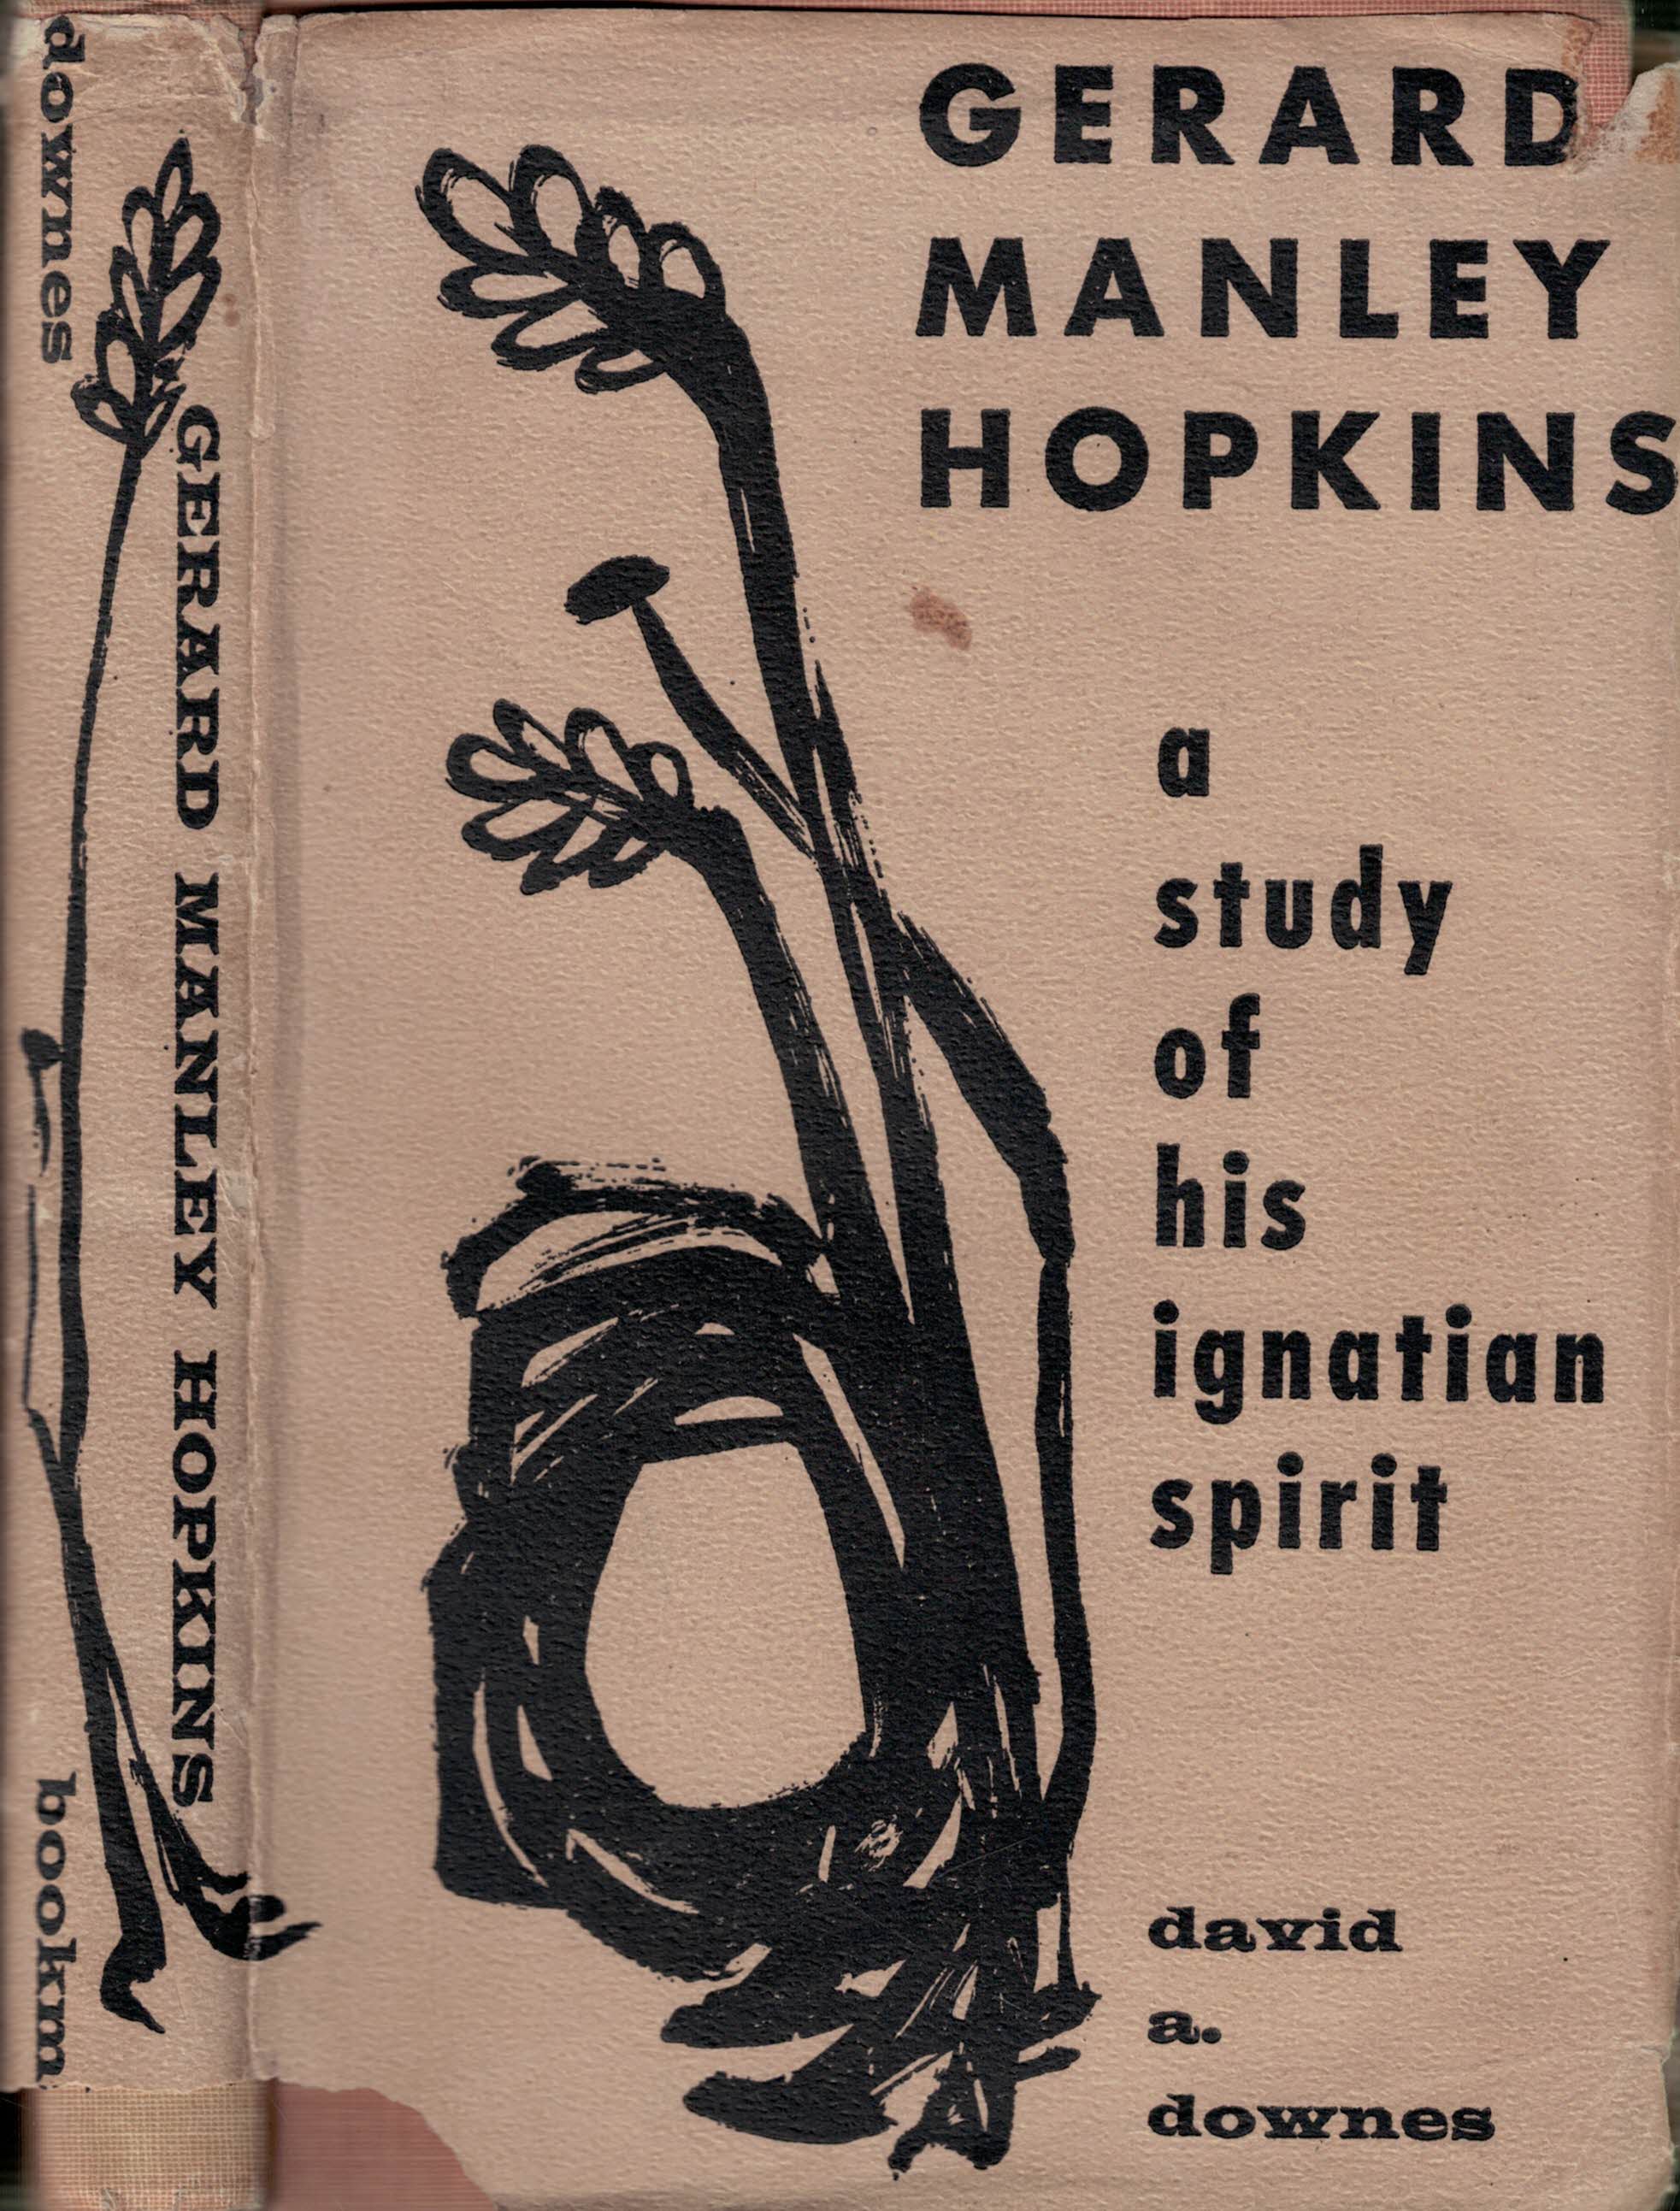 Gerard Manley Hopkins. A Study of His Ignatian Spirit. Signed copy.